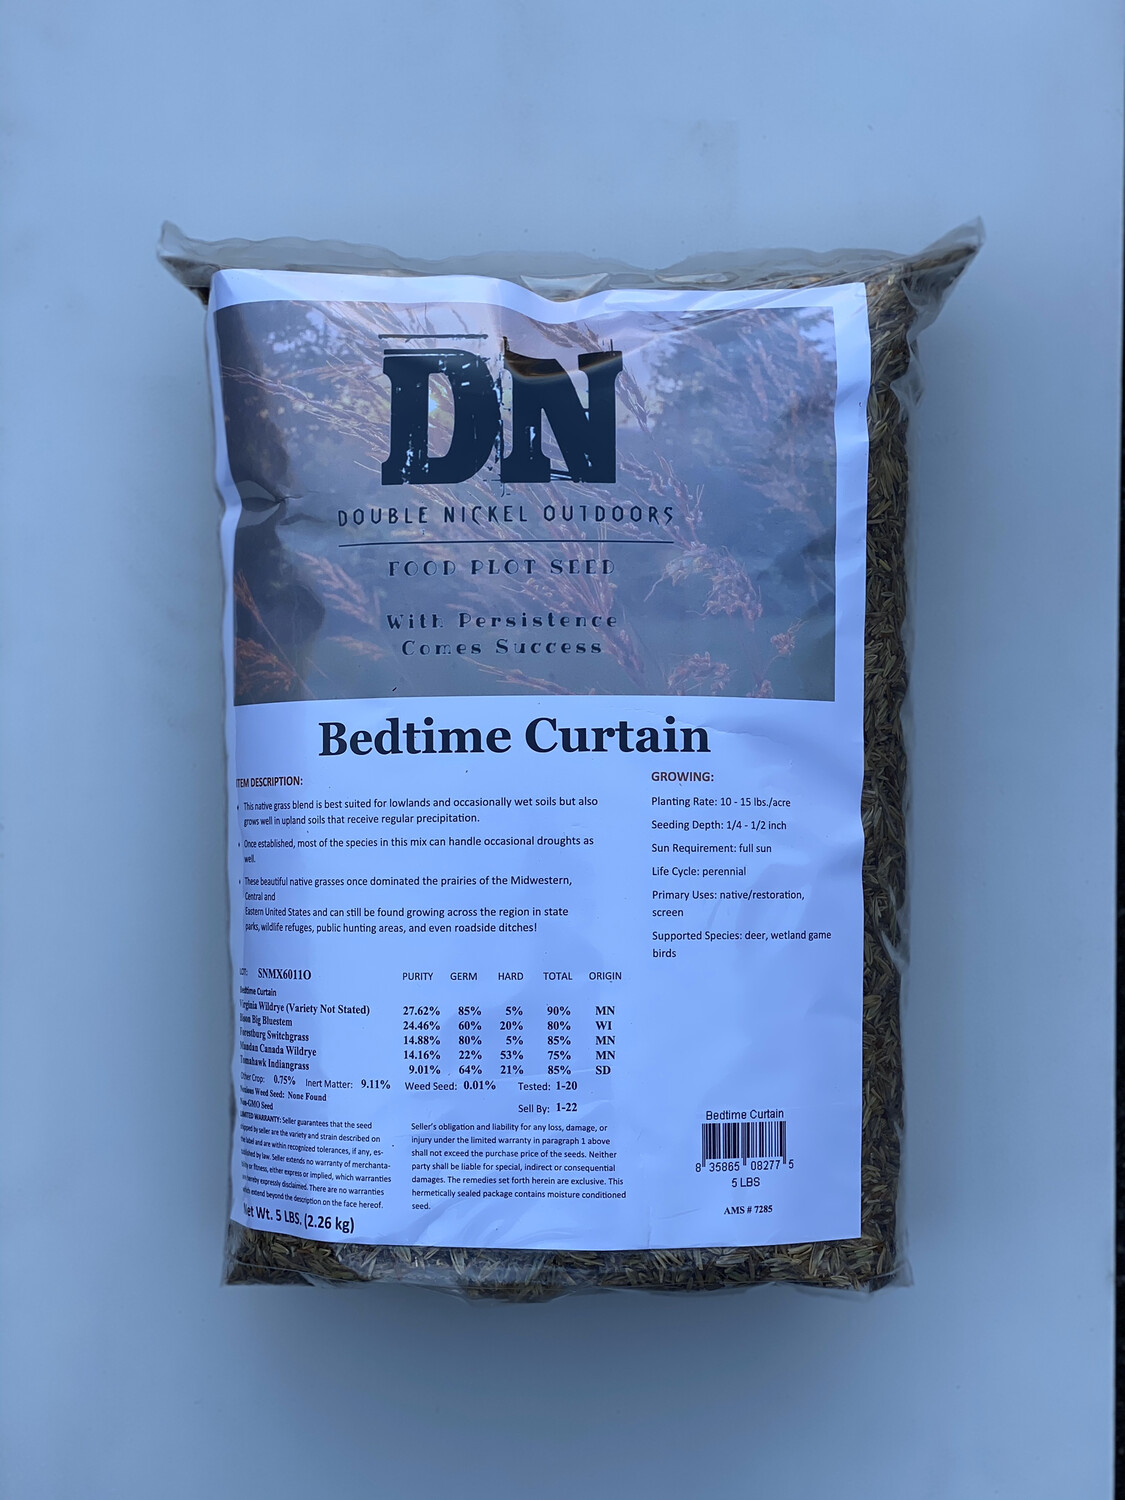 Bedtime Curtain Seed 5lb Bag